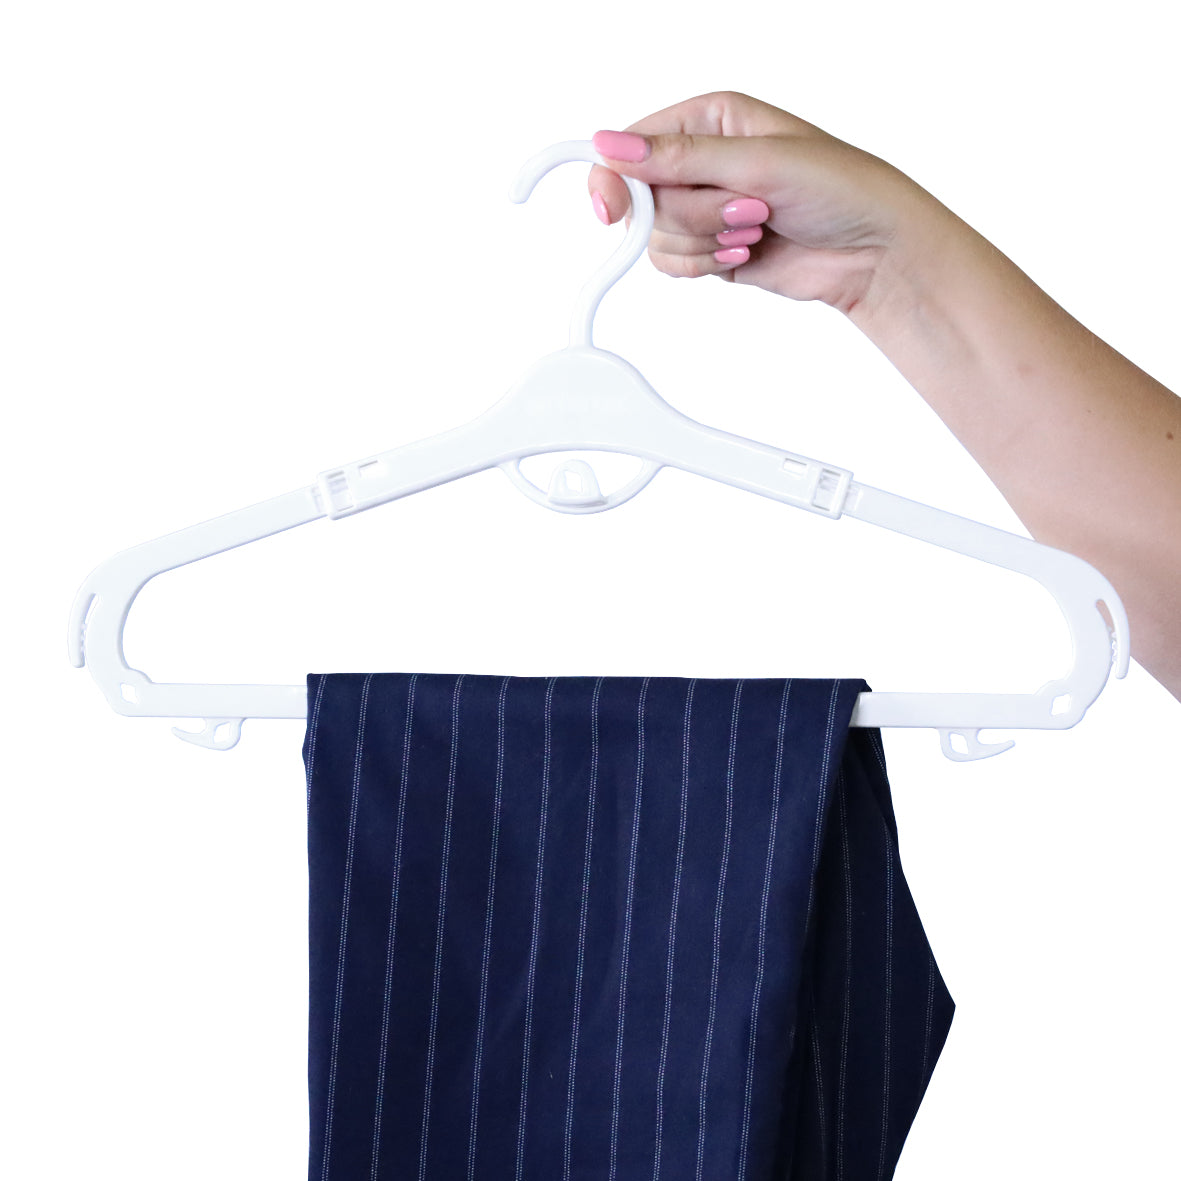 Grohanger - hanger for adult trousers